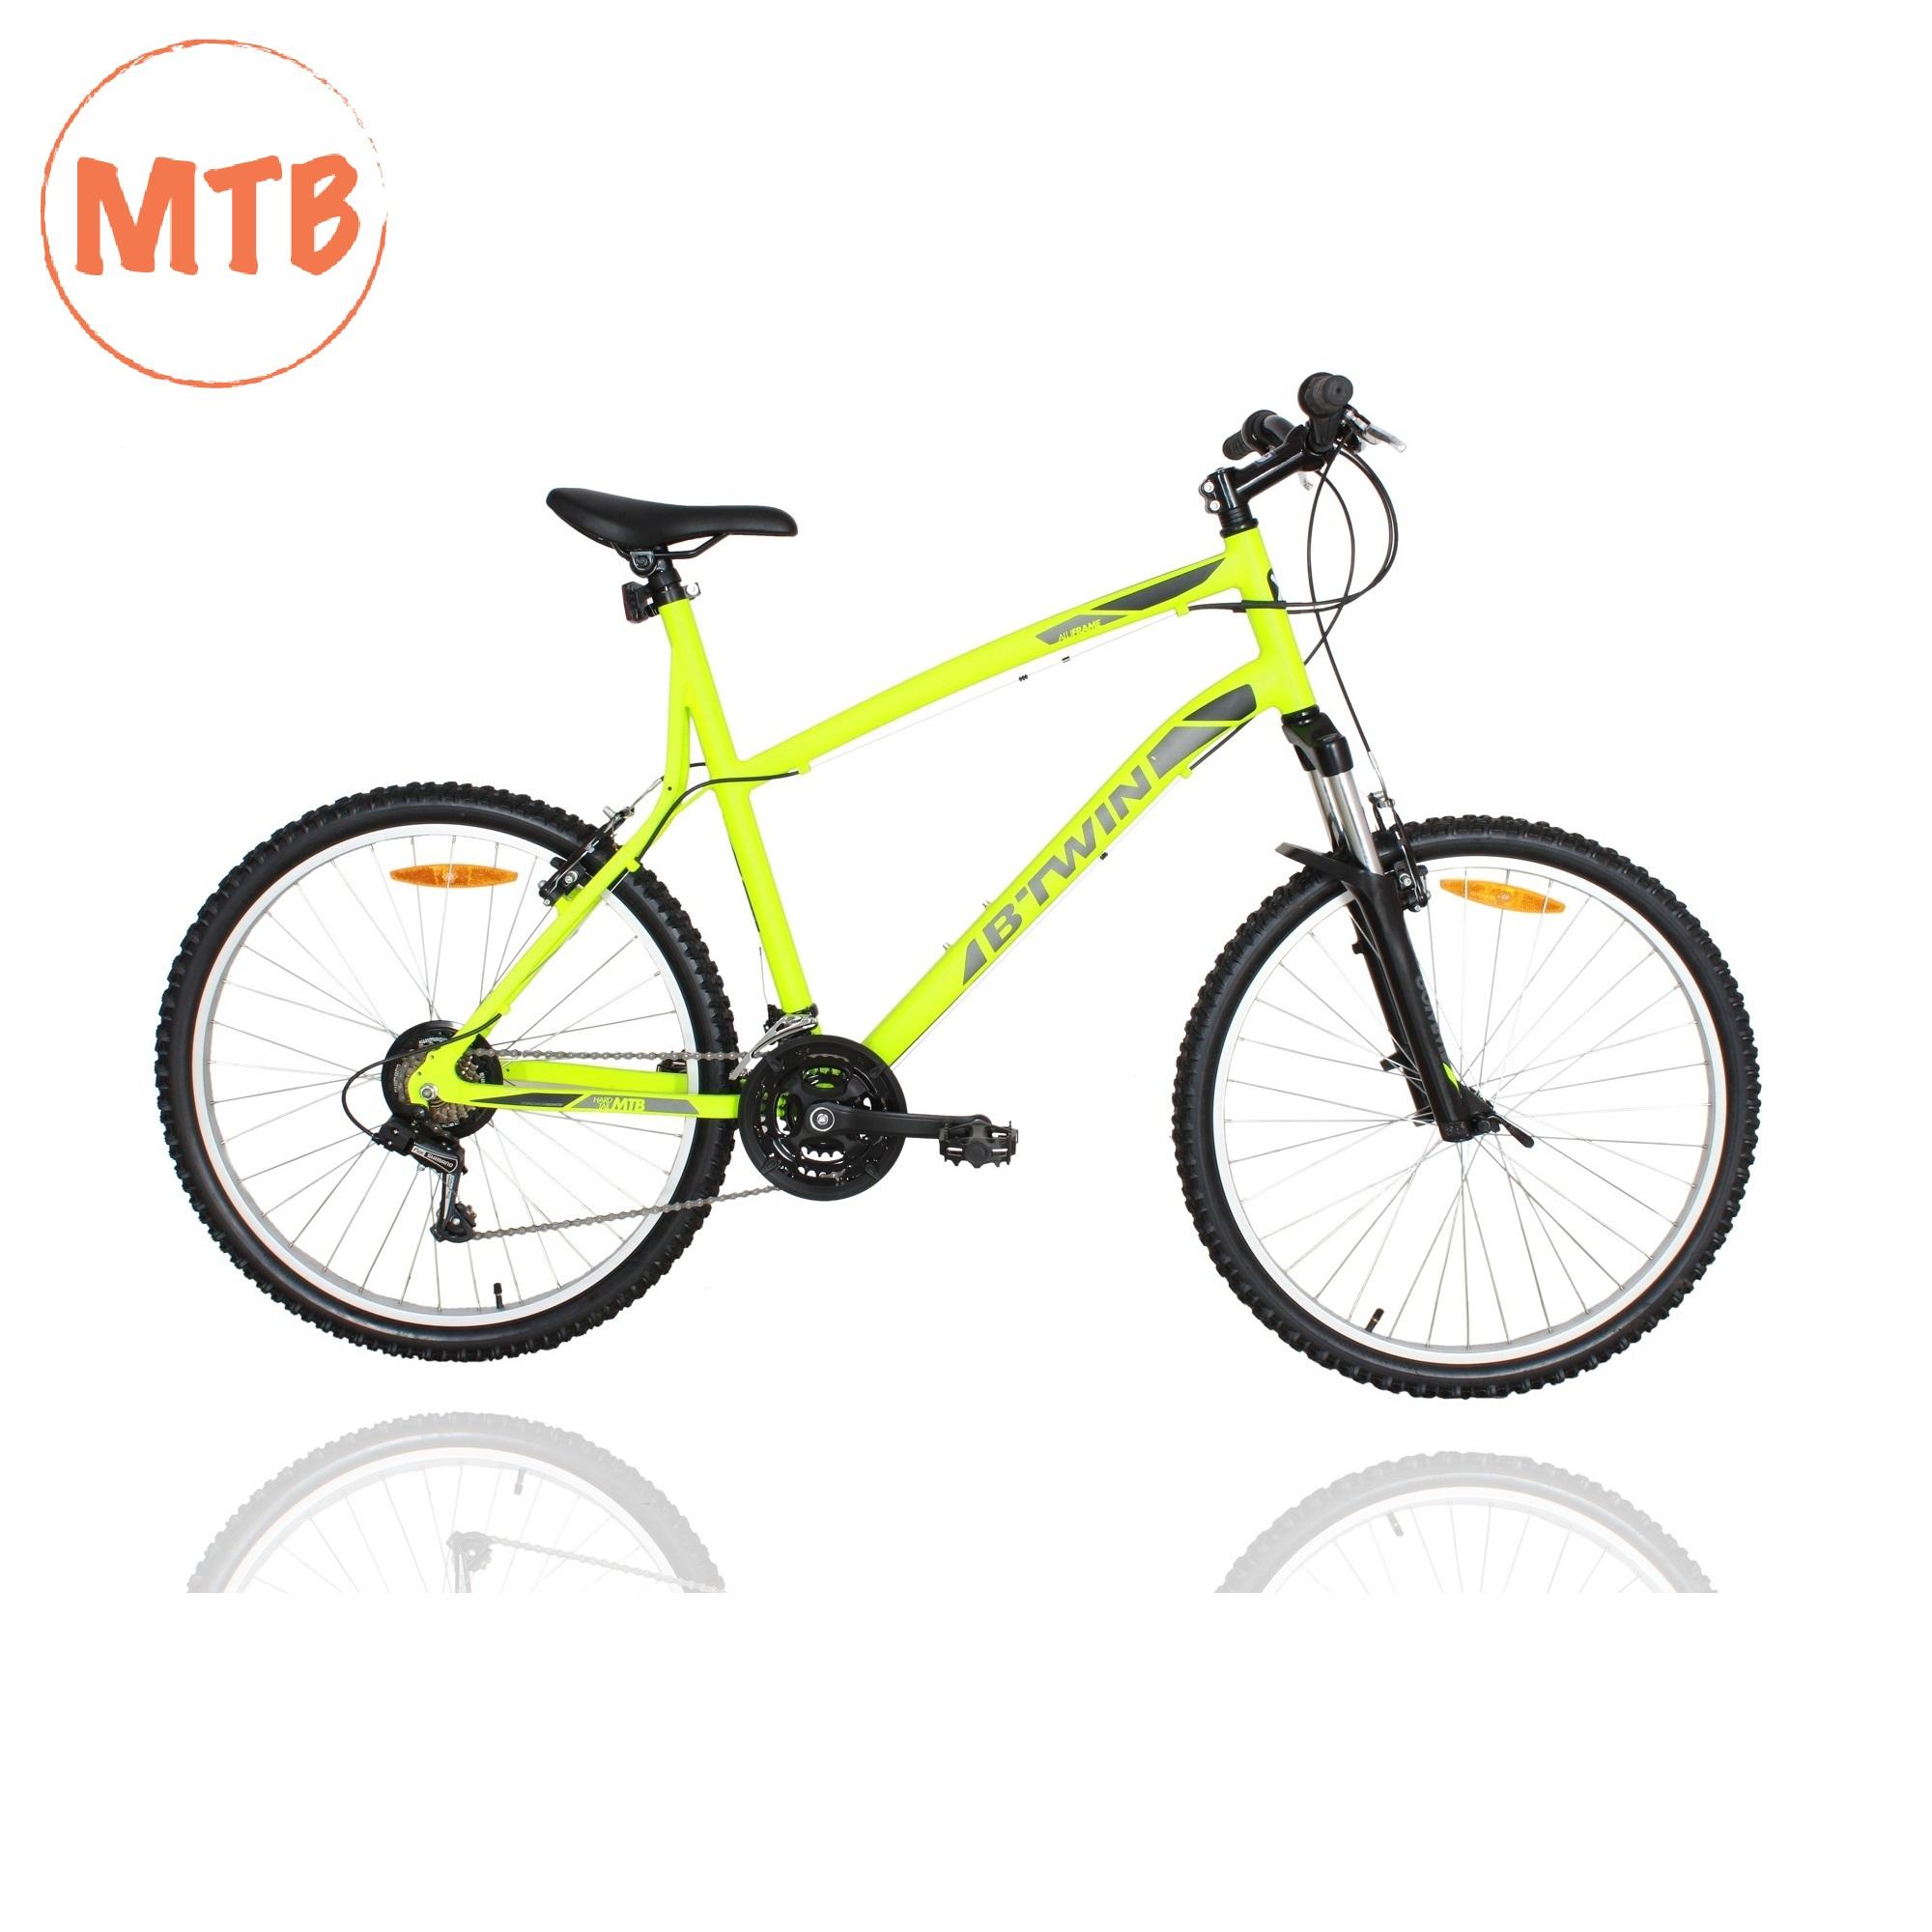 btwin rockrider 340 grey yellow mtb cycle